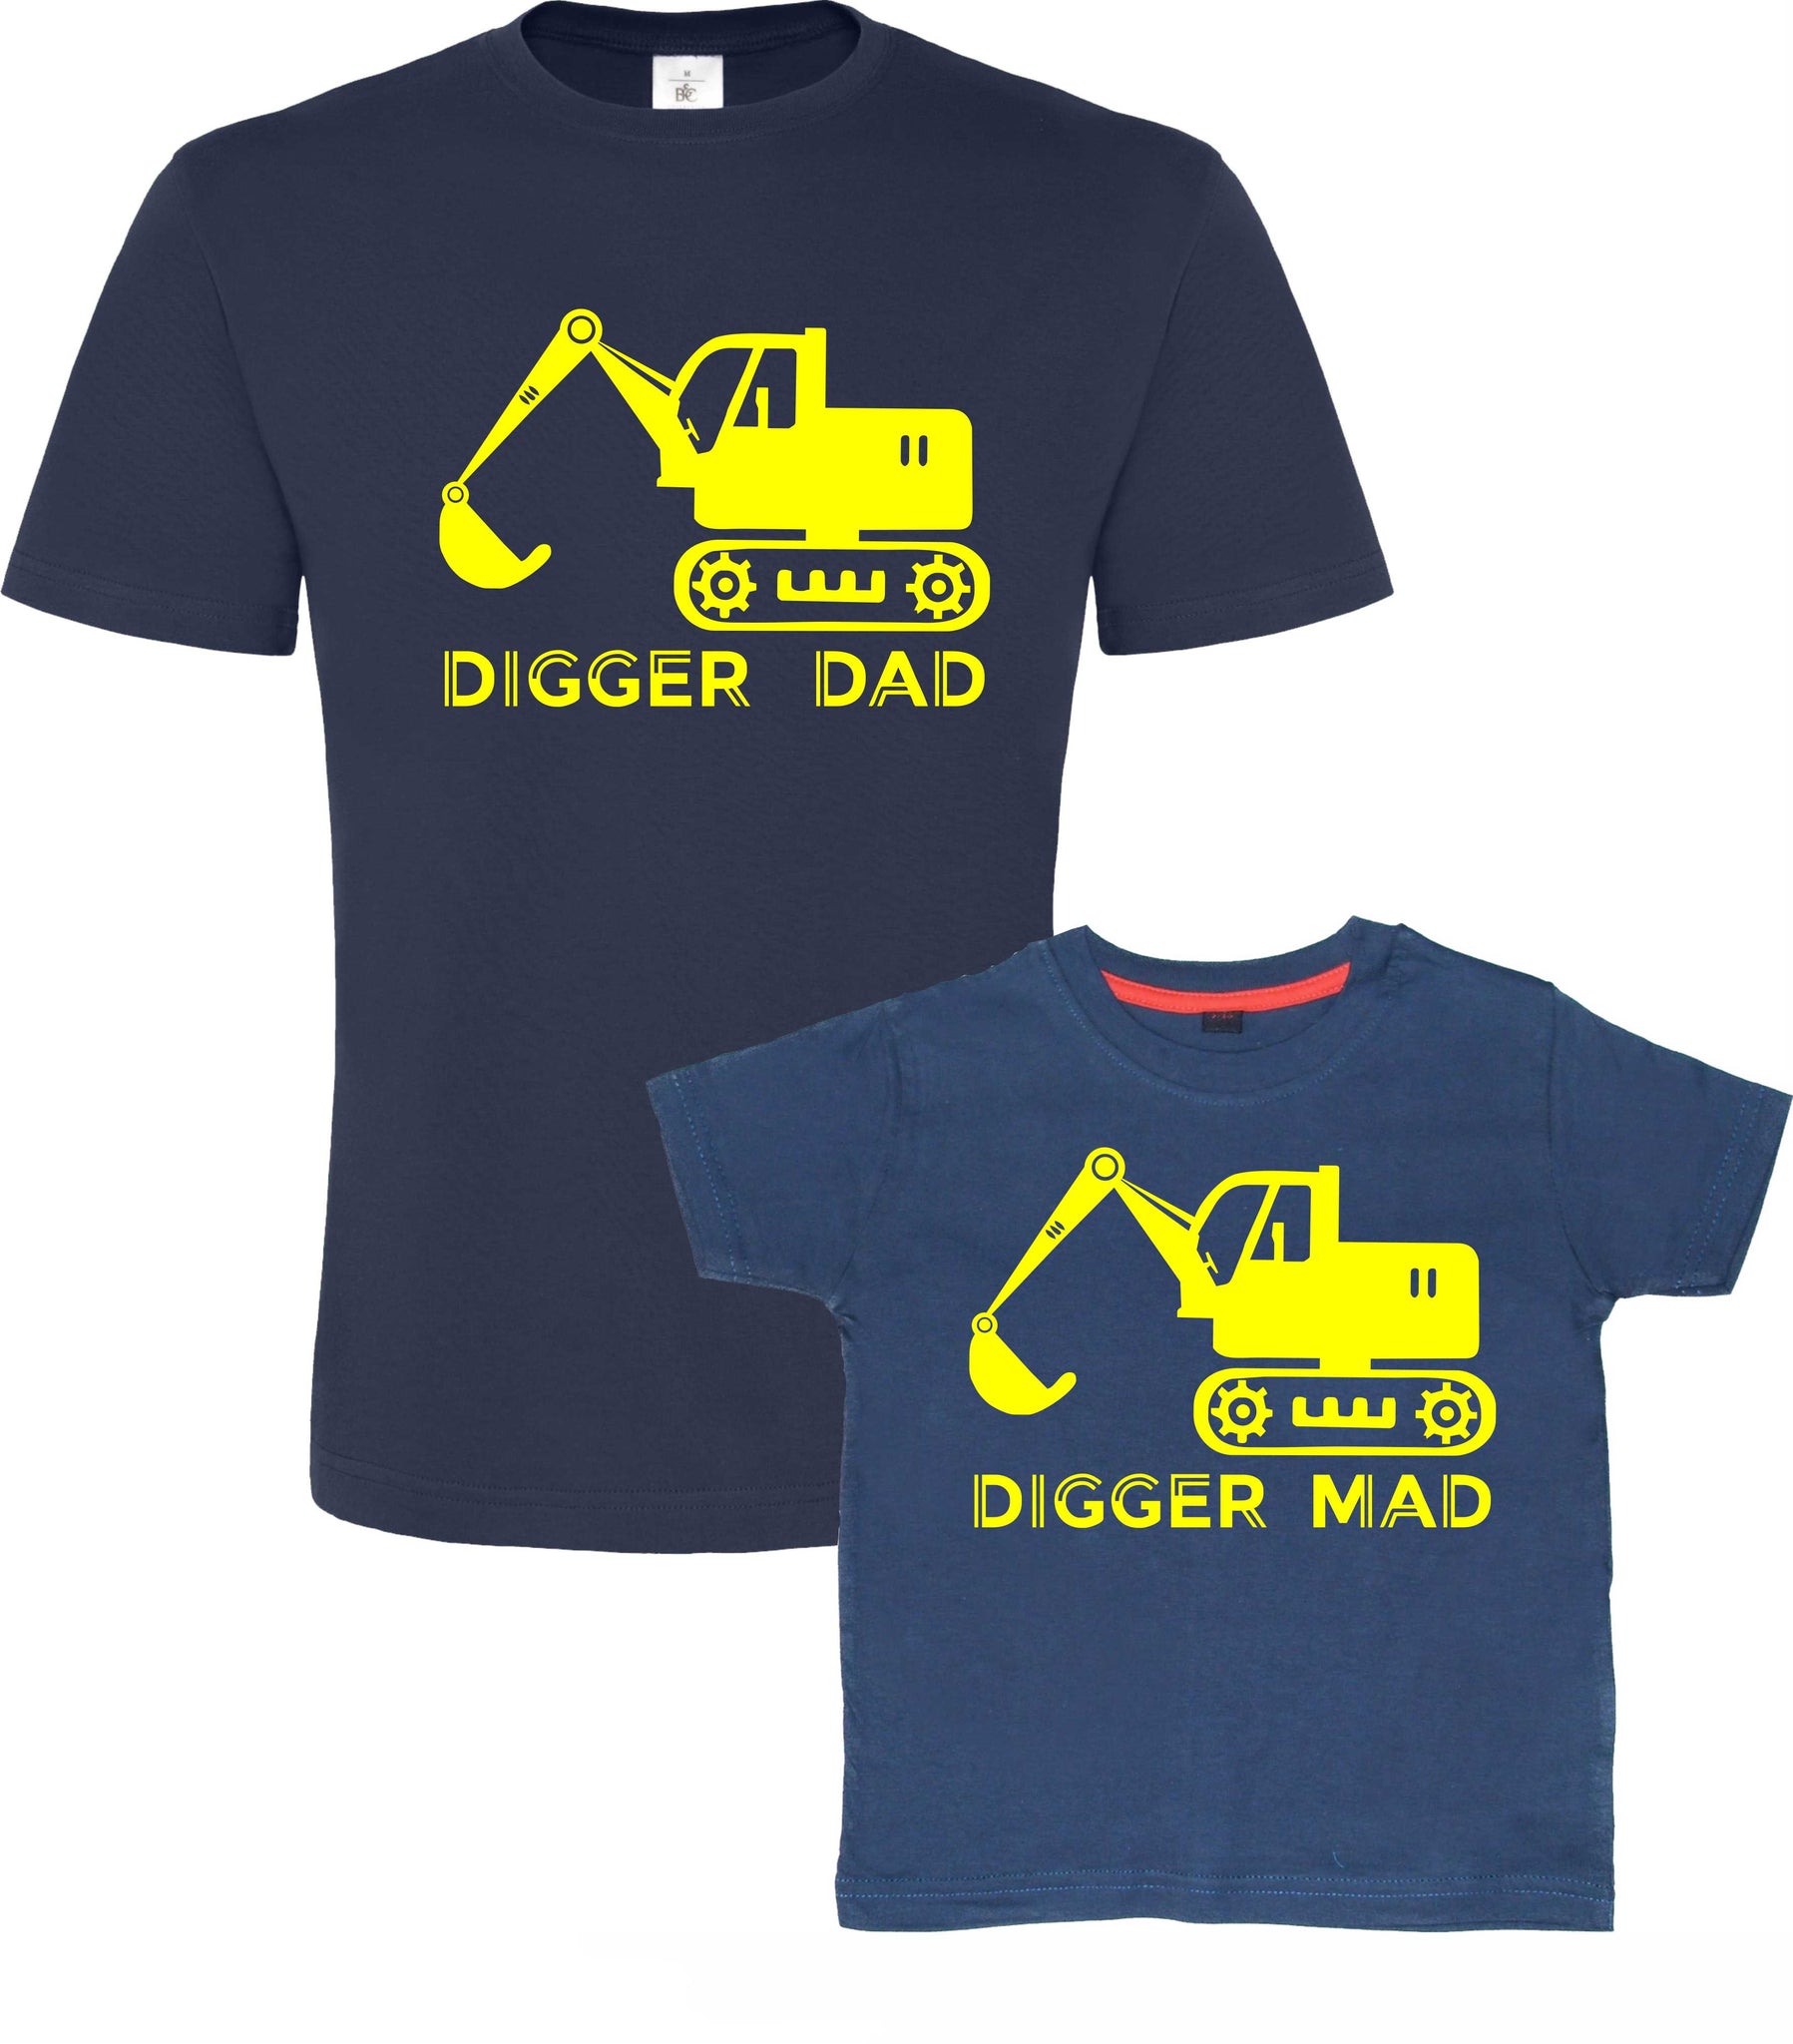 Digger Dad and Digger Mad T-Shirt Set